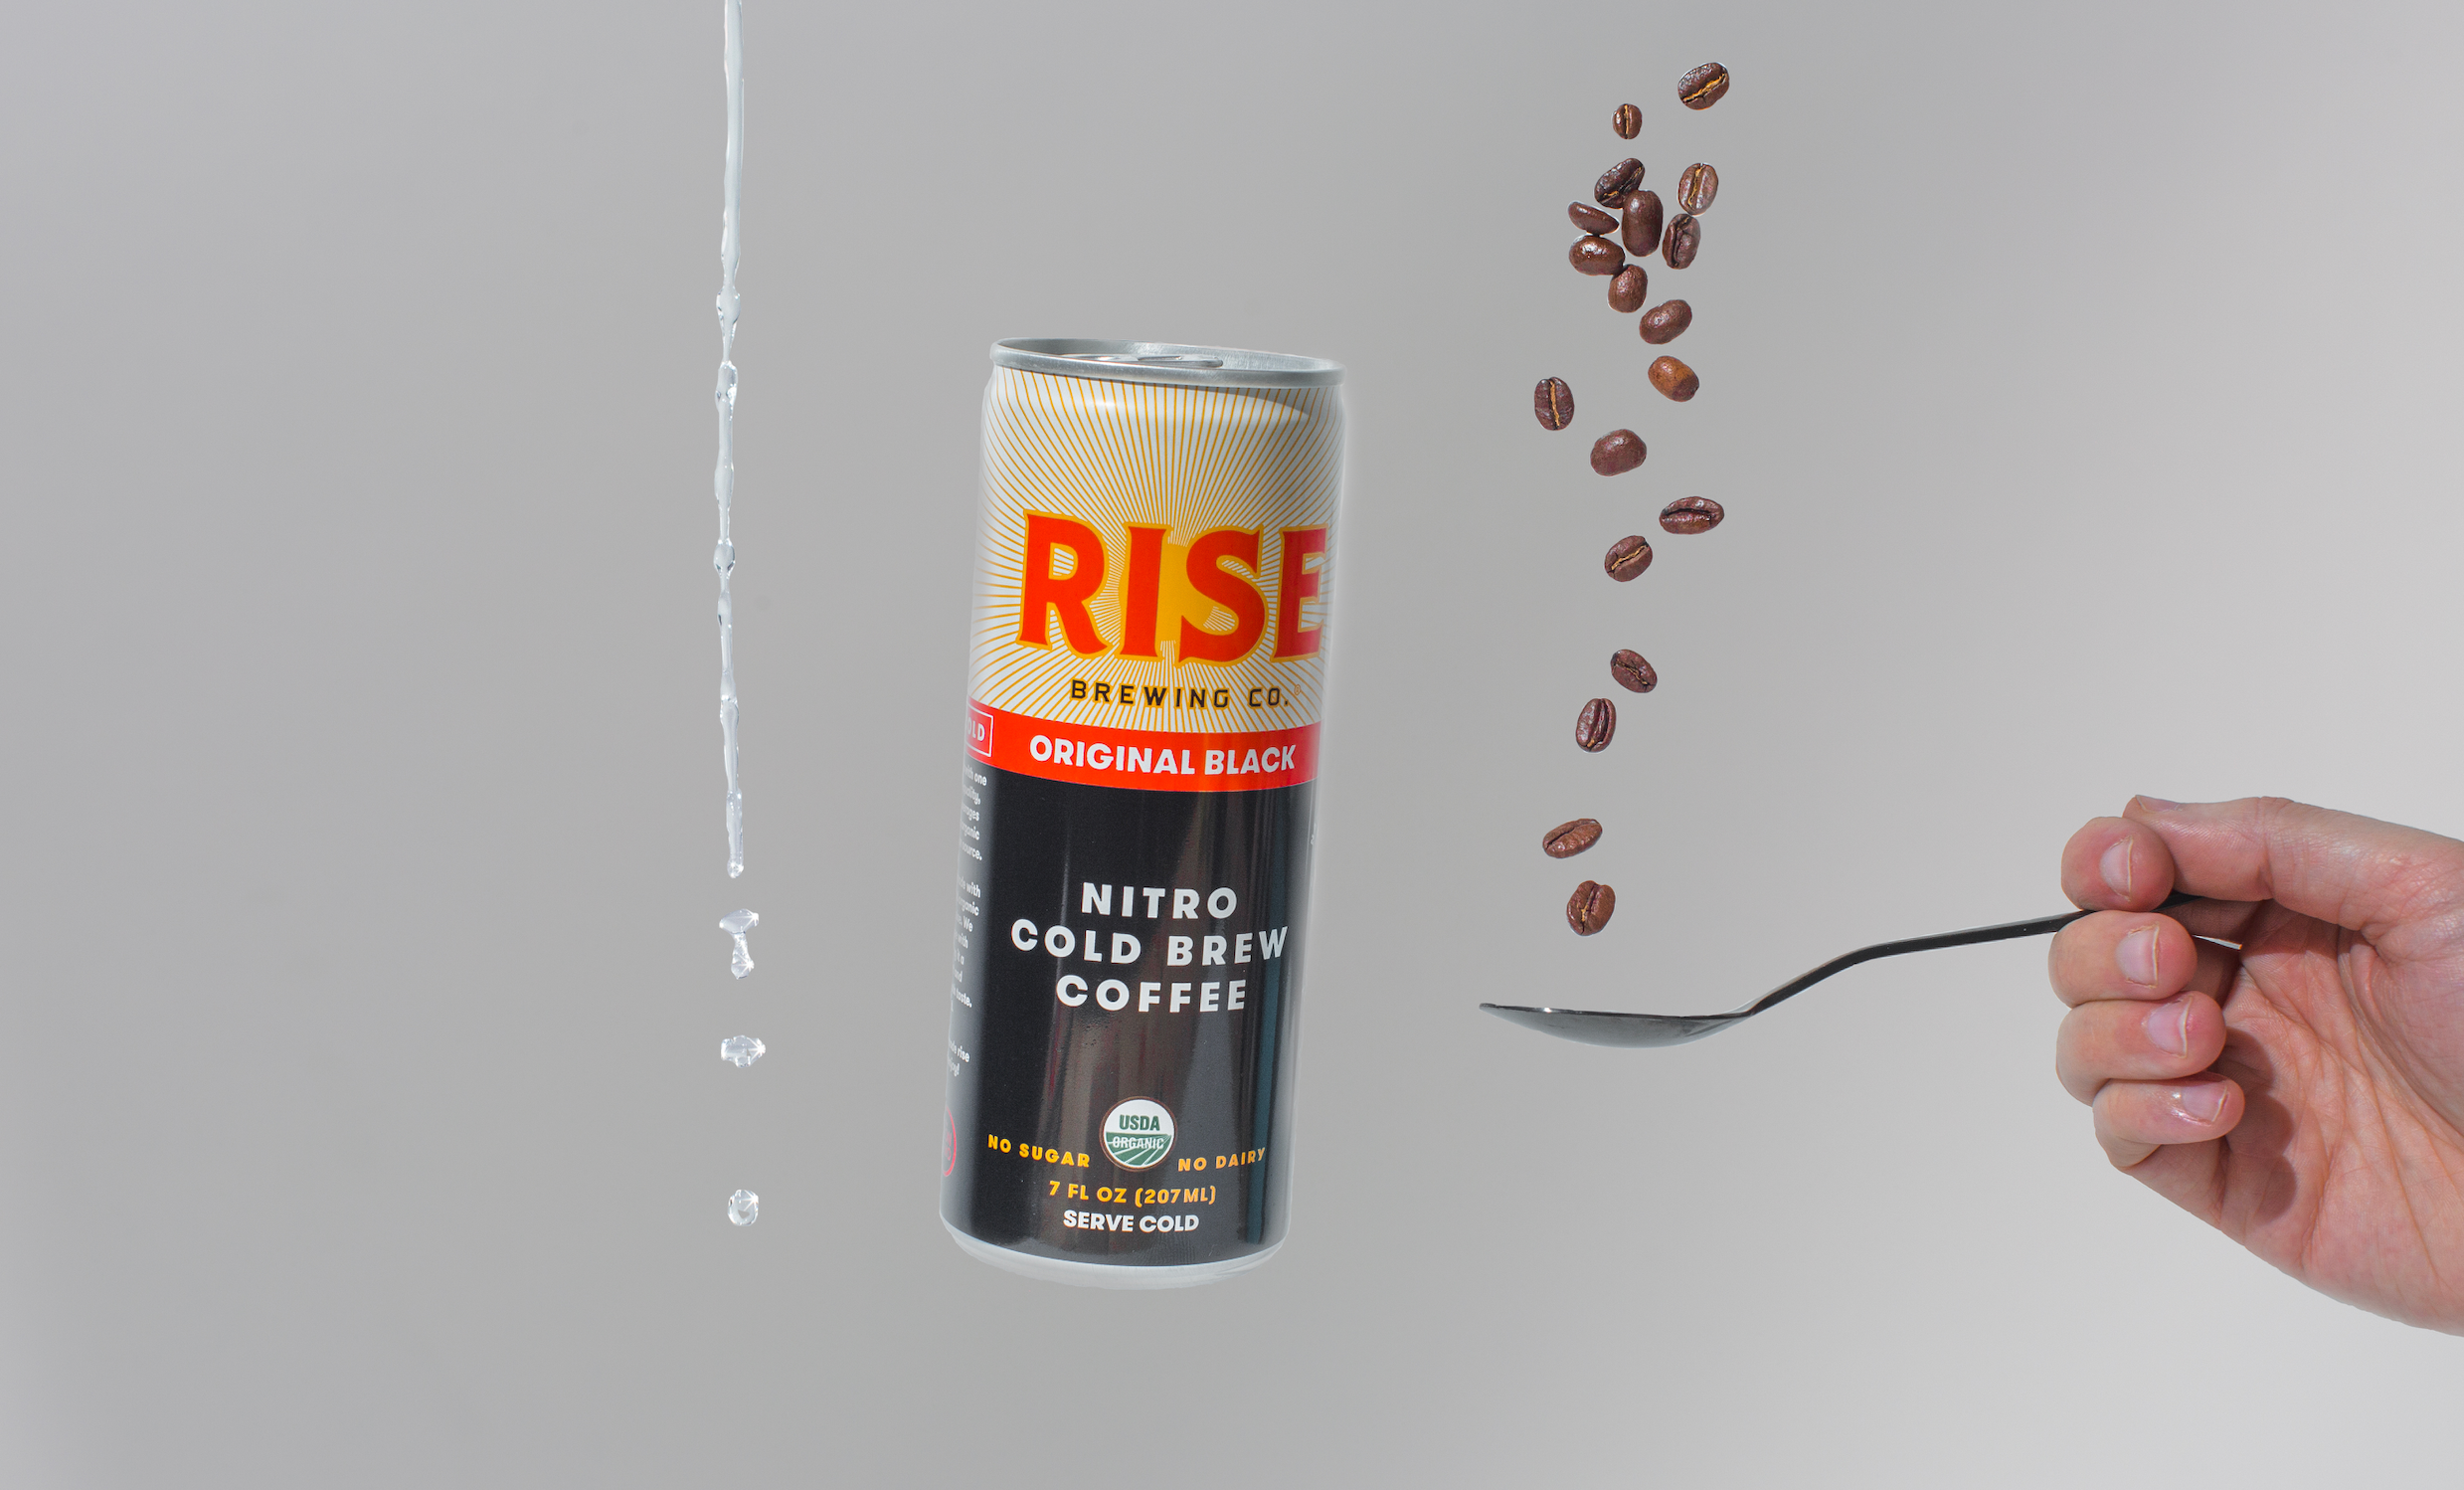 RISE Brewing Co. Original Black Cold Brew Coffee